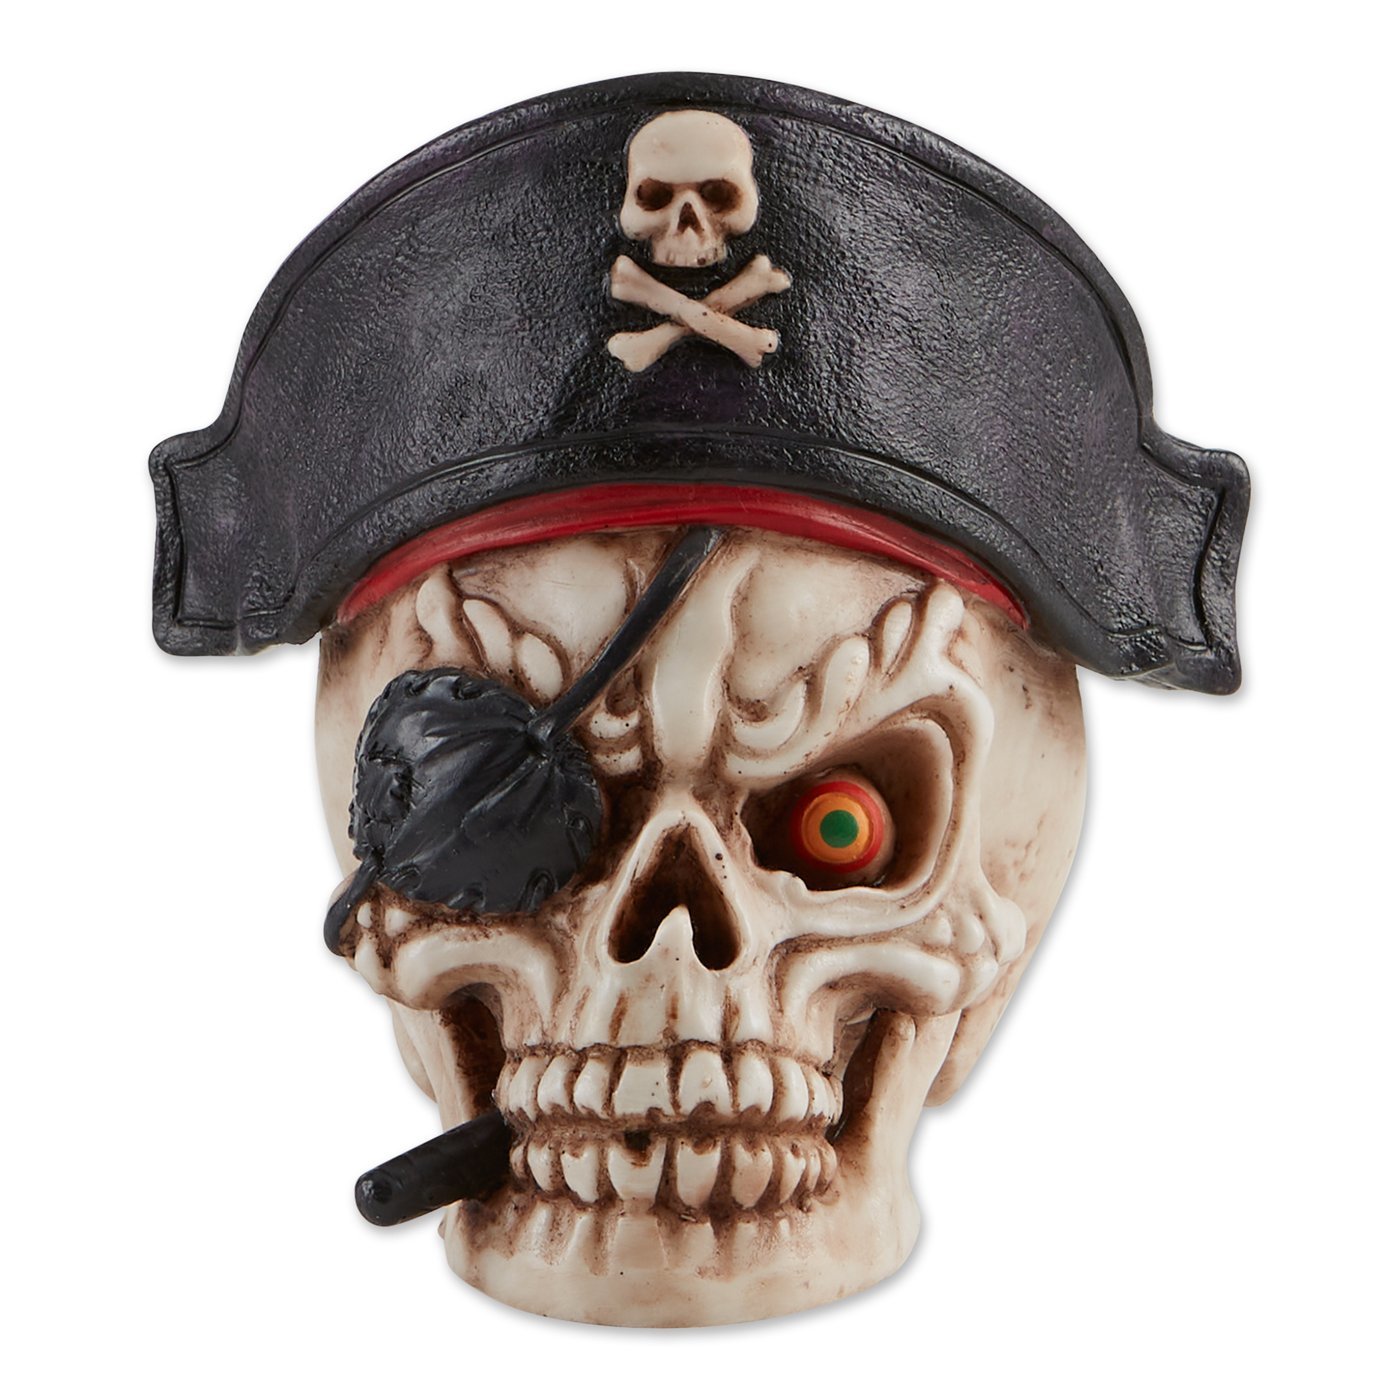 Grinning Pirate Skull - $26.04